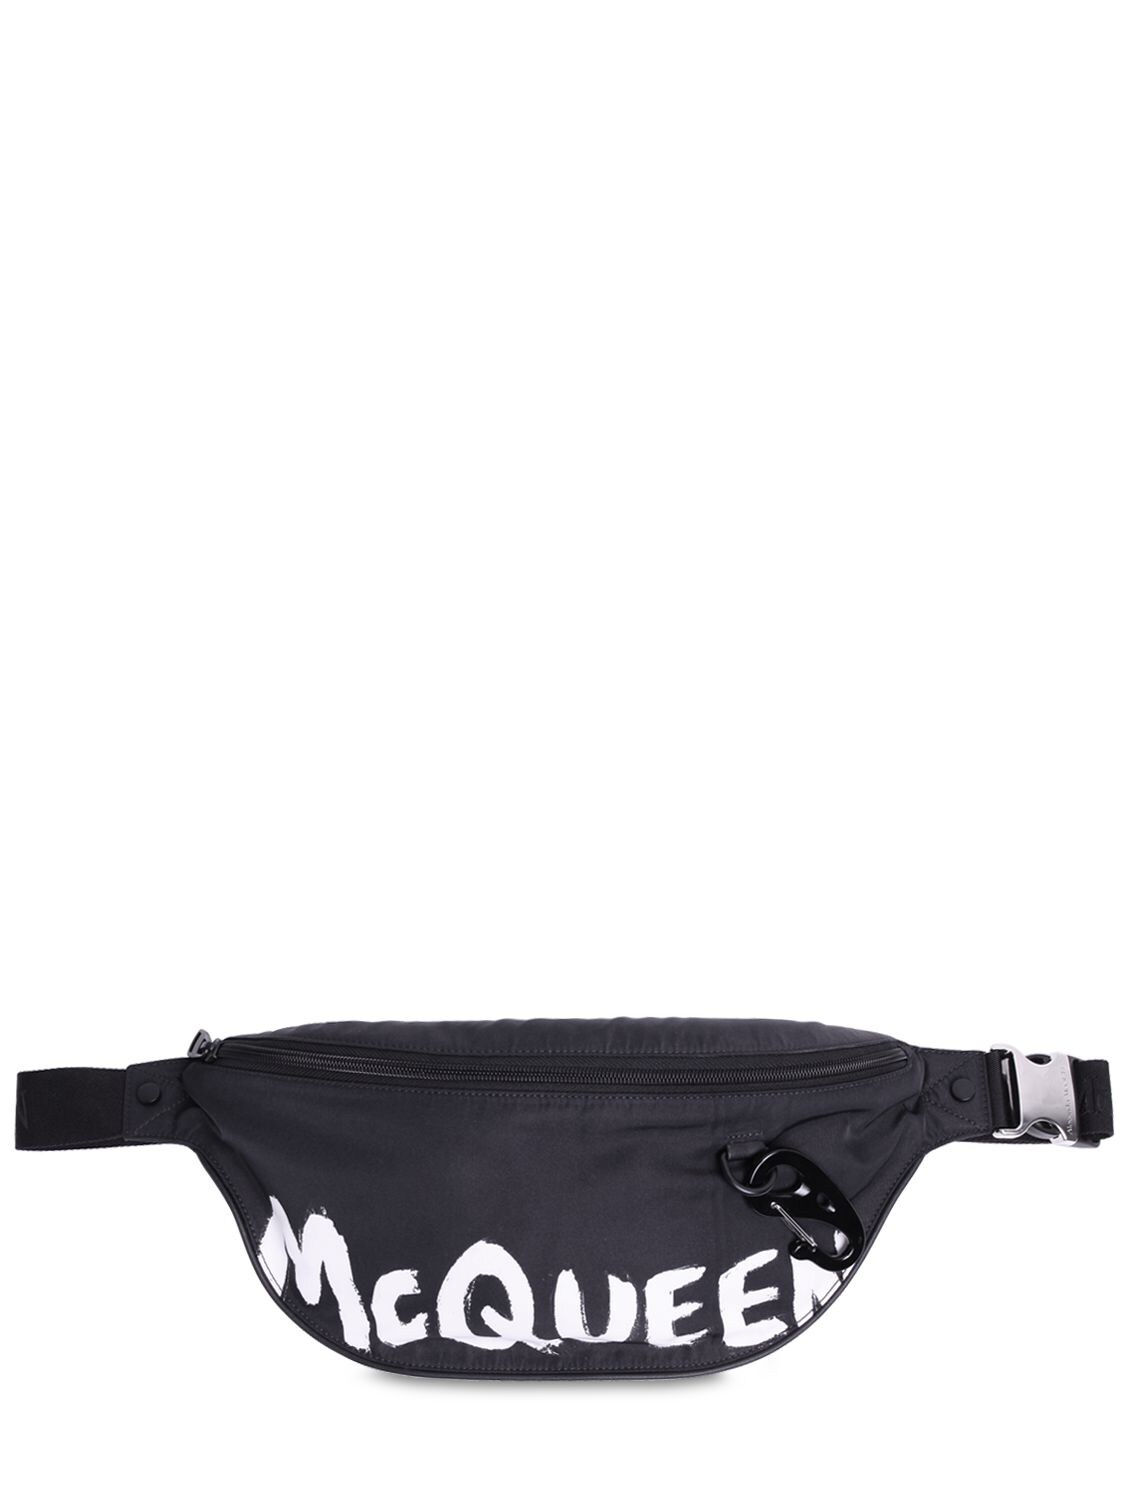 ALEXANDER MCQUEEN Logo Graffiti Print Nylon Belt Bag